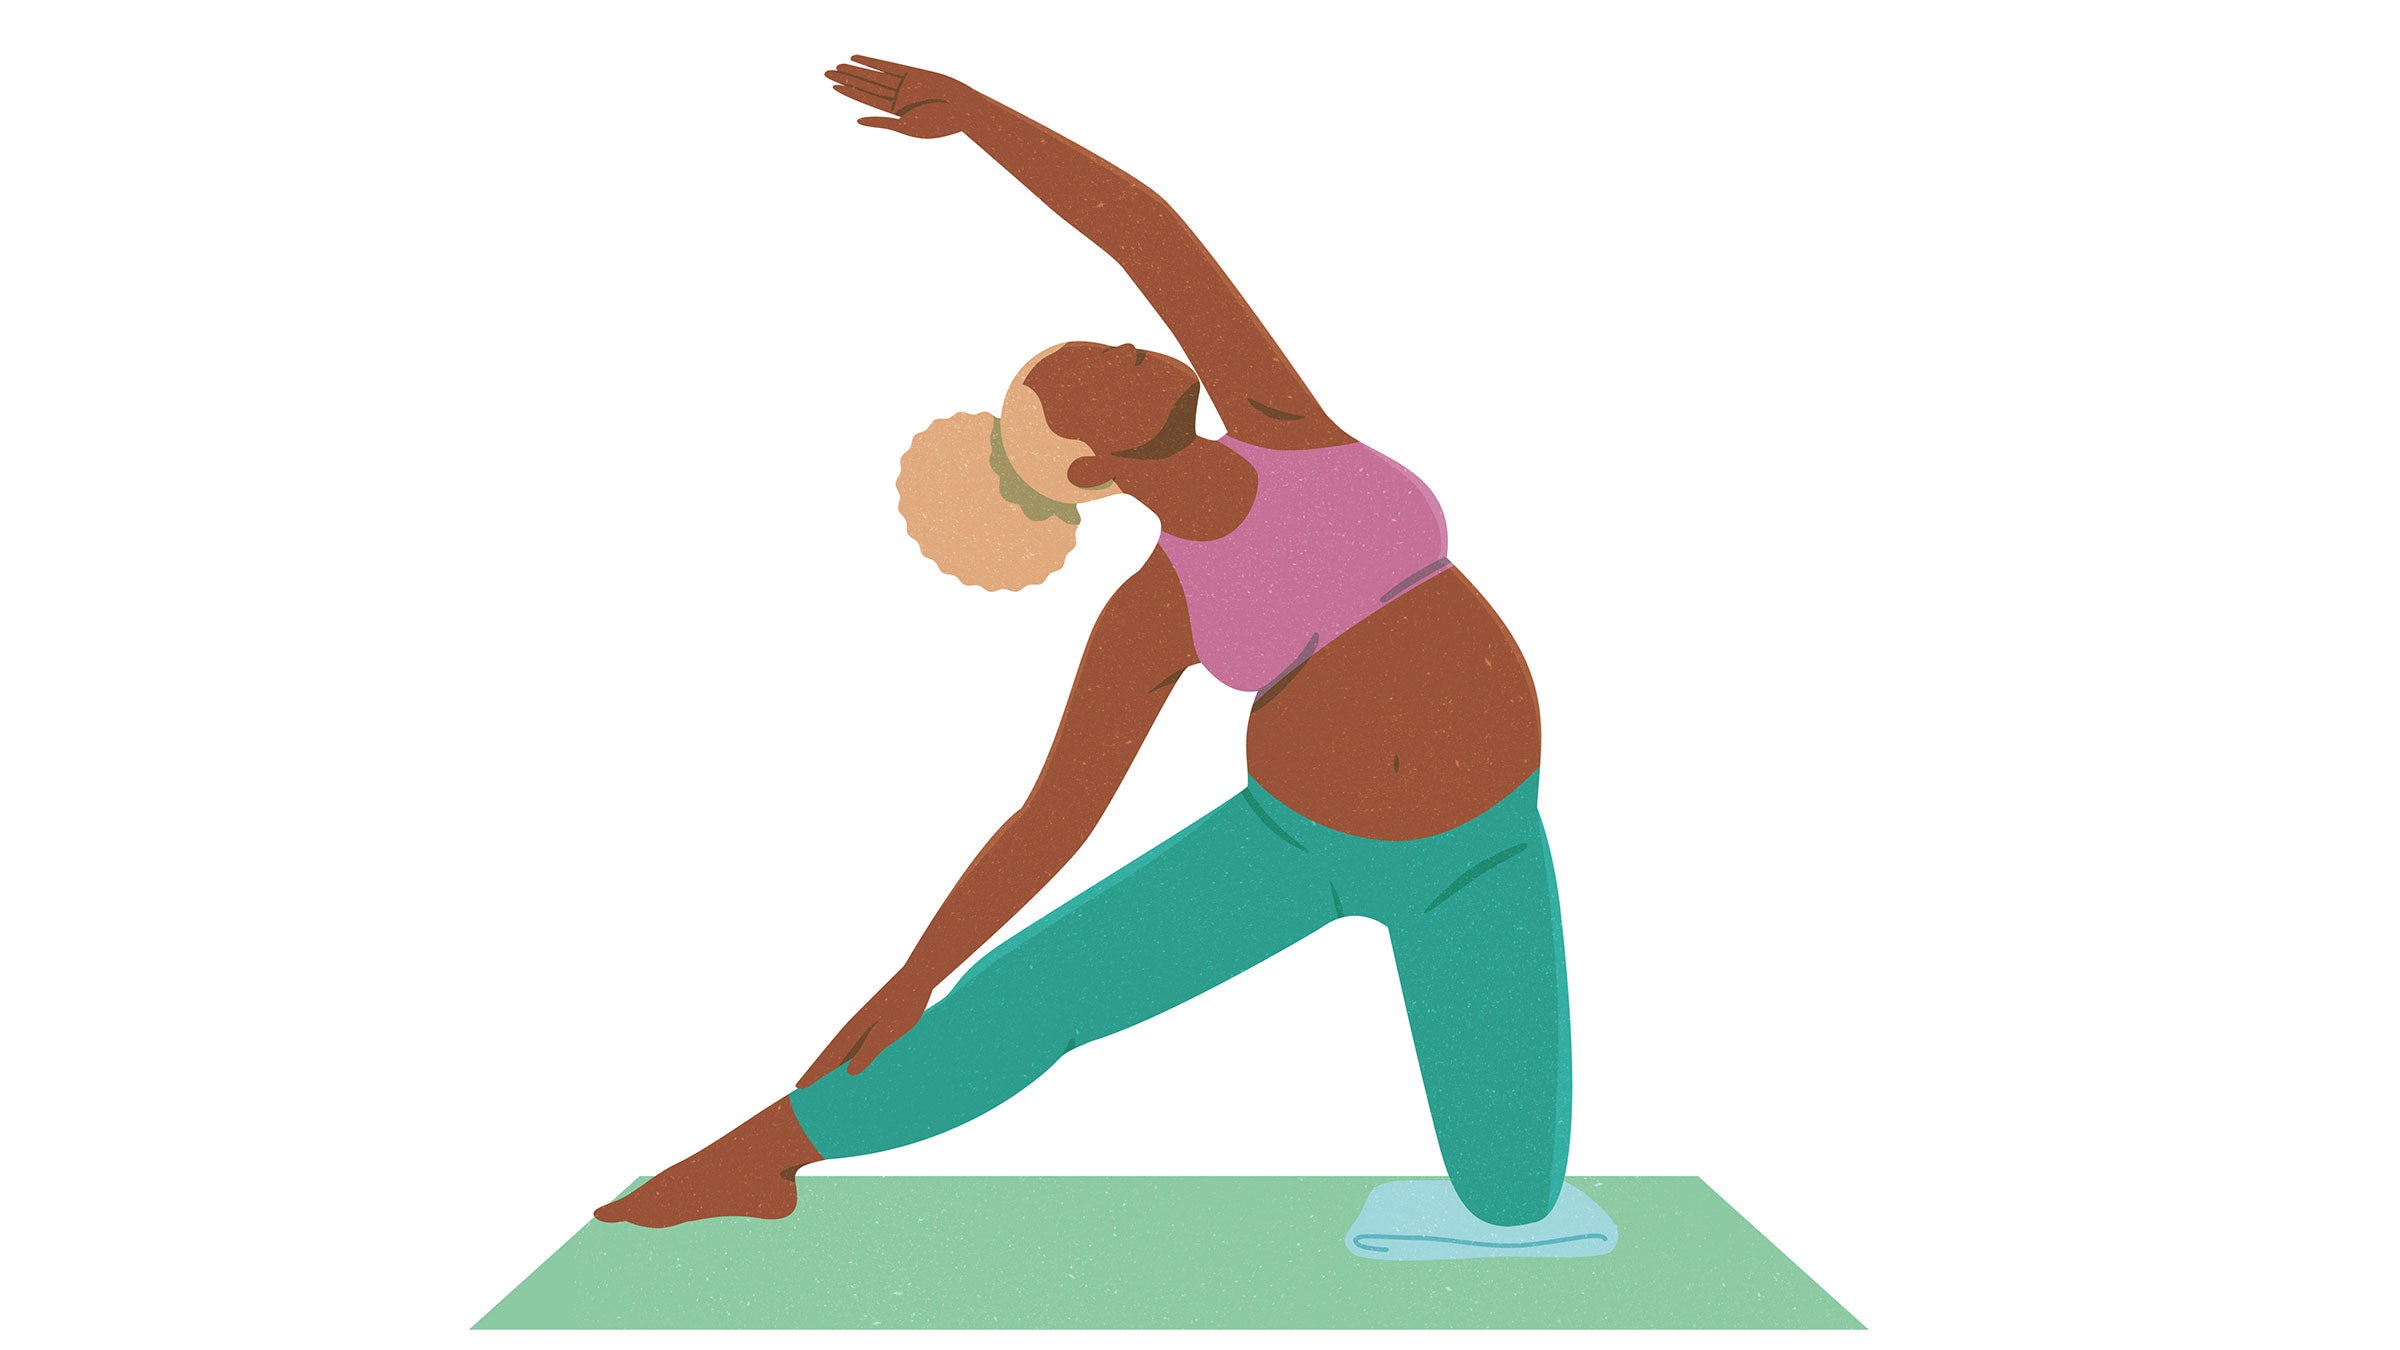 imgur.com | Pregnancy yoga, Pregnancy workout, Yoga during pregnancy